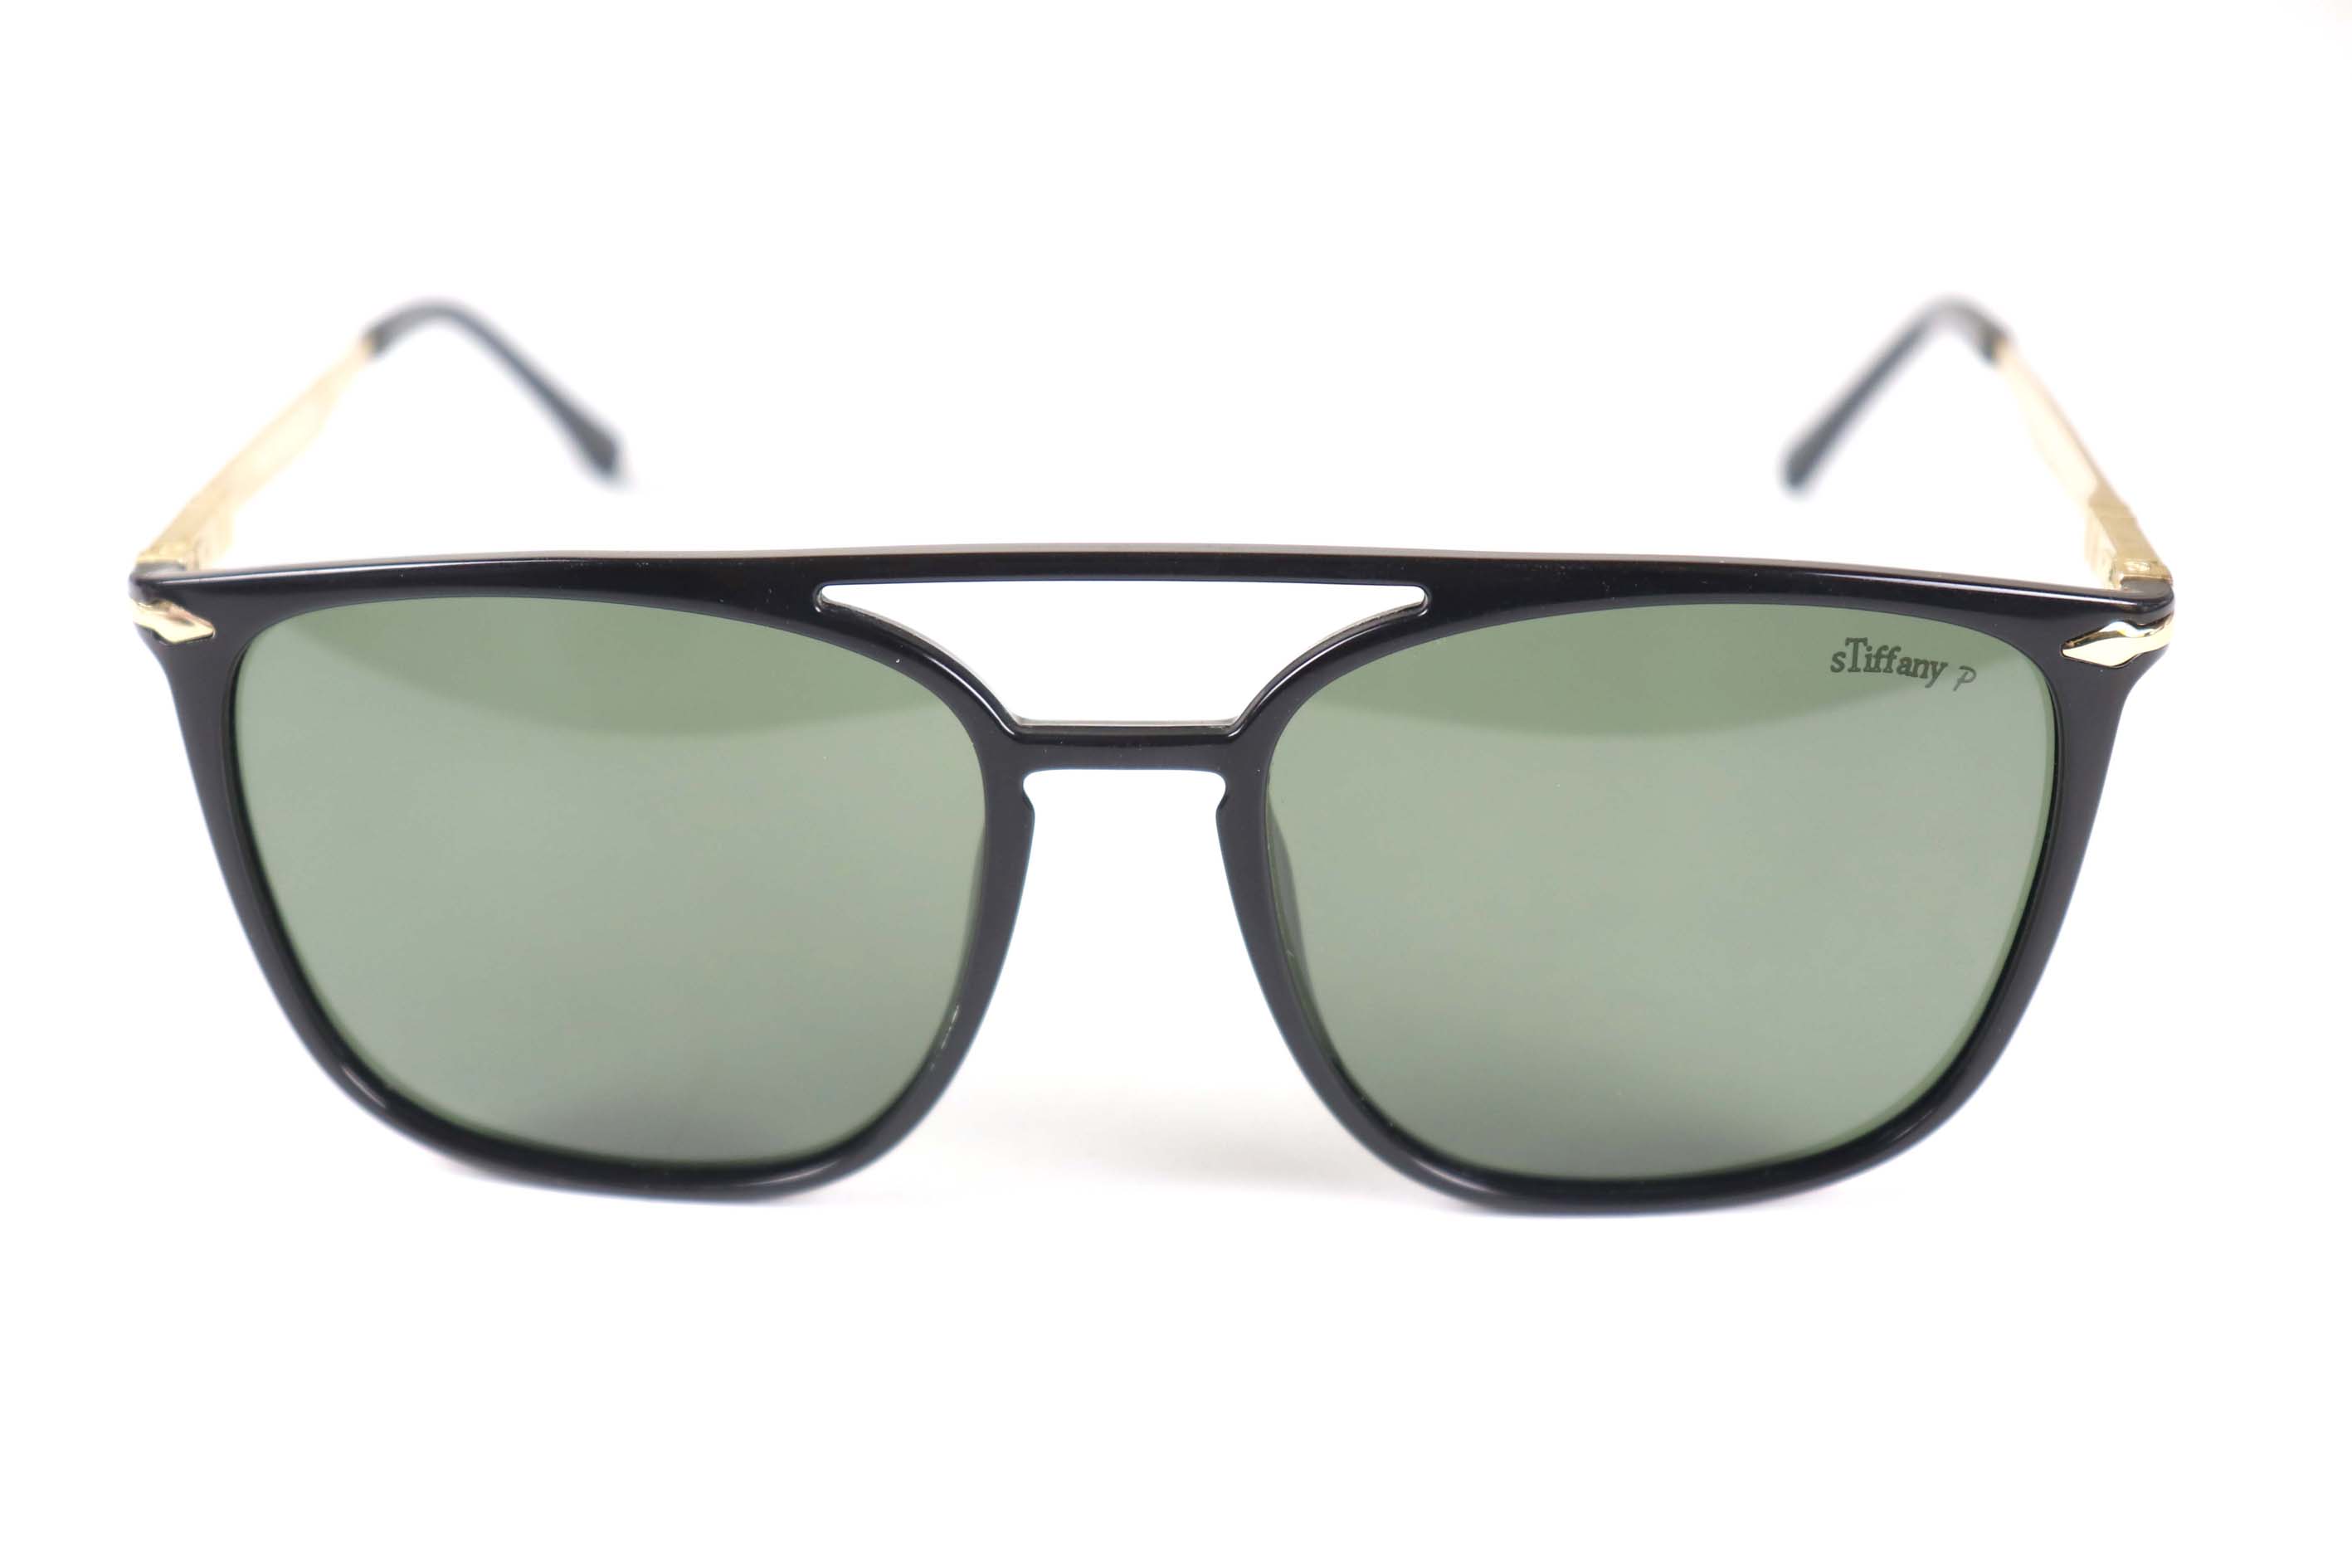 Stiffany Sunglasses-OR-OAK19037-C6-S